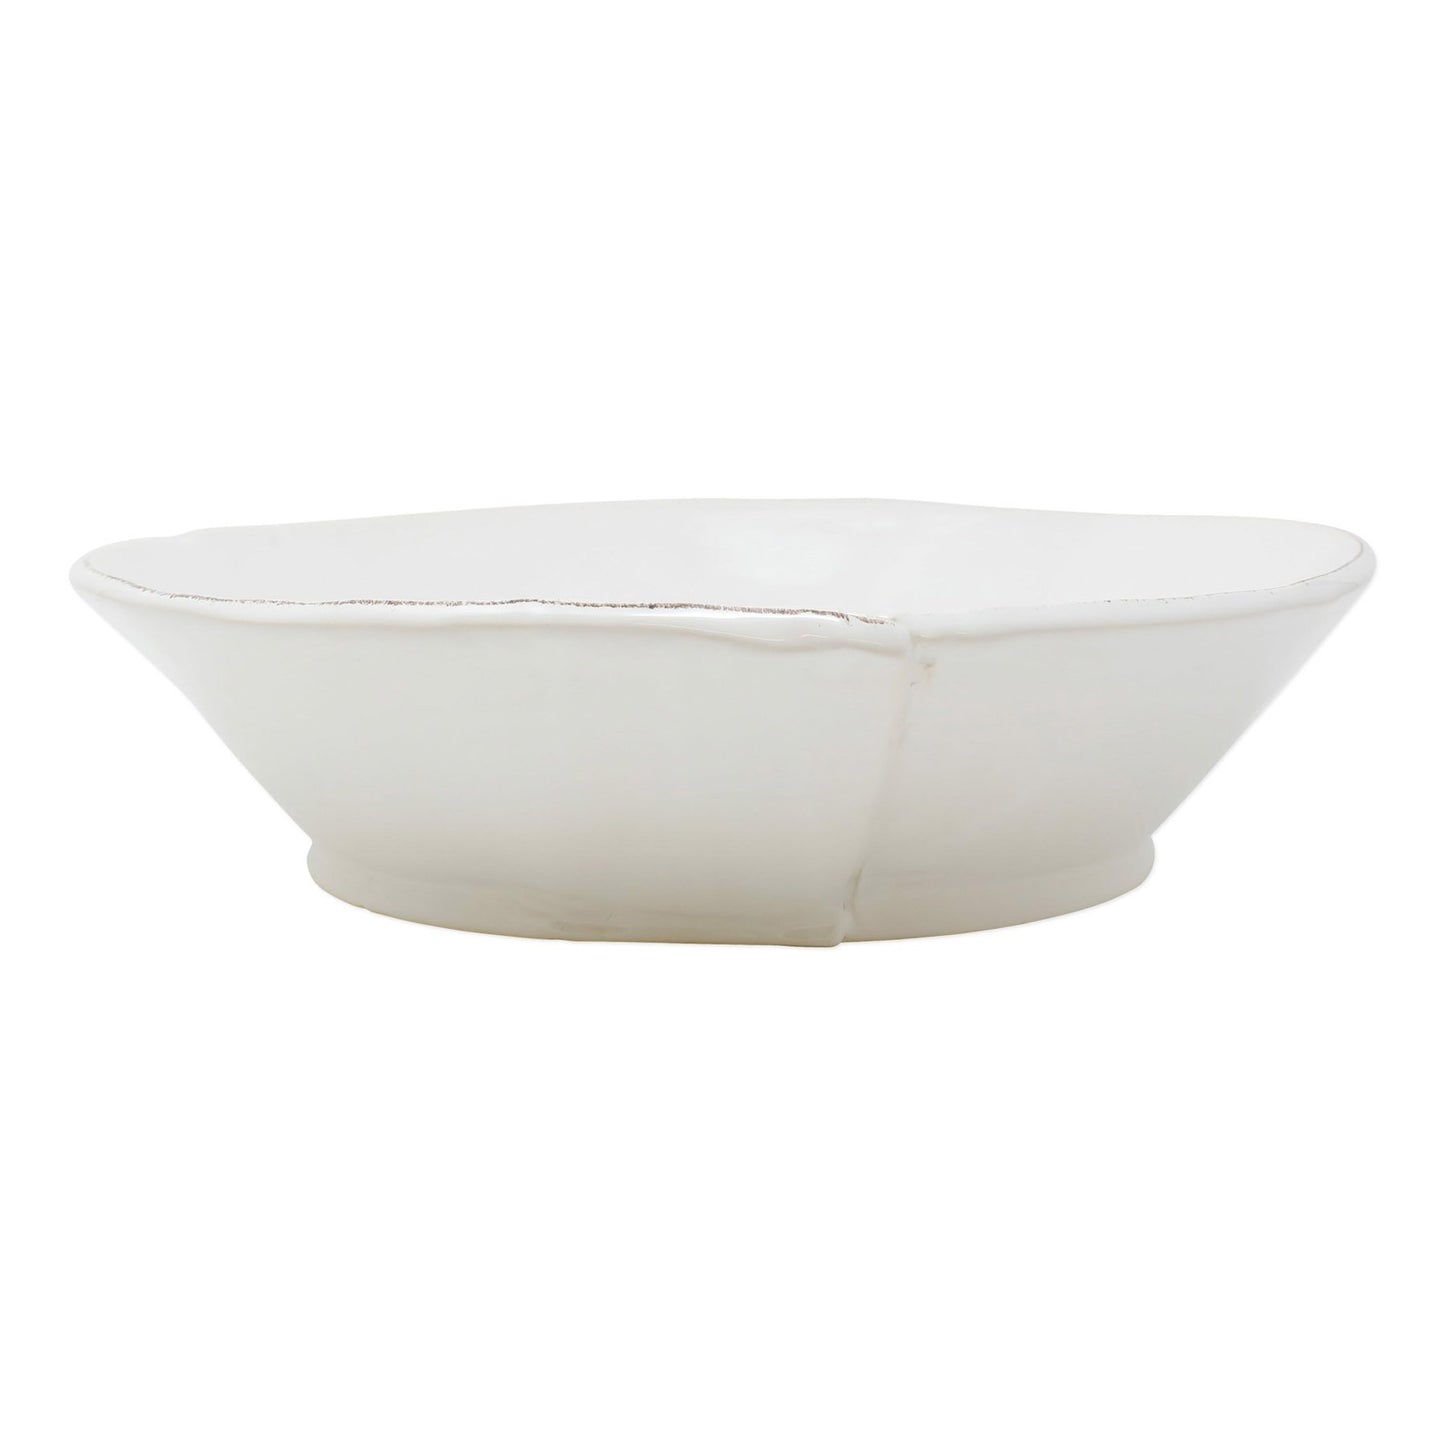 serving bowl on white background.